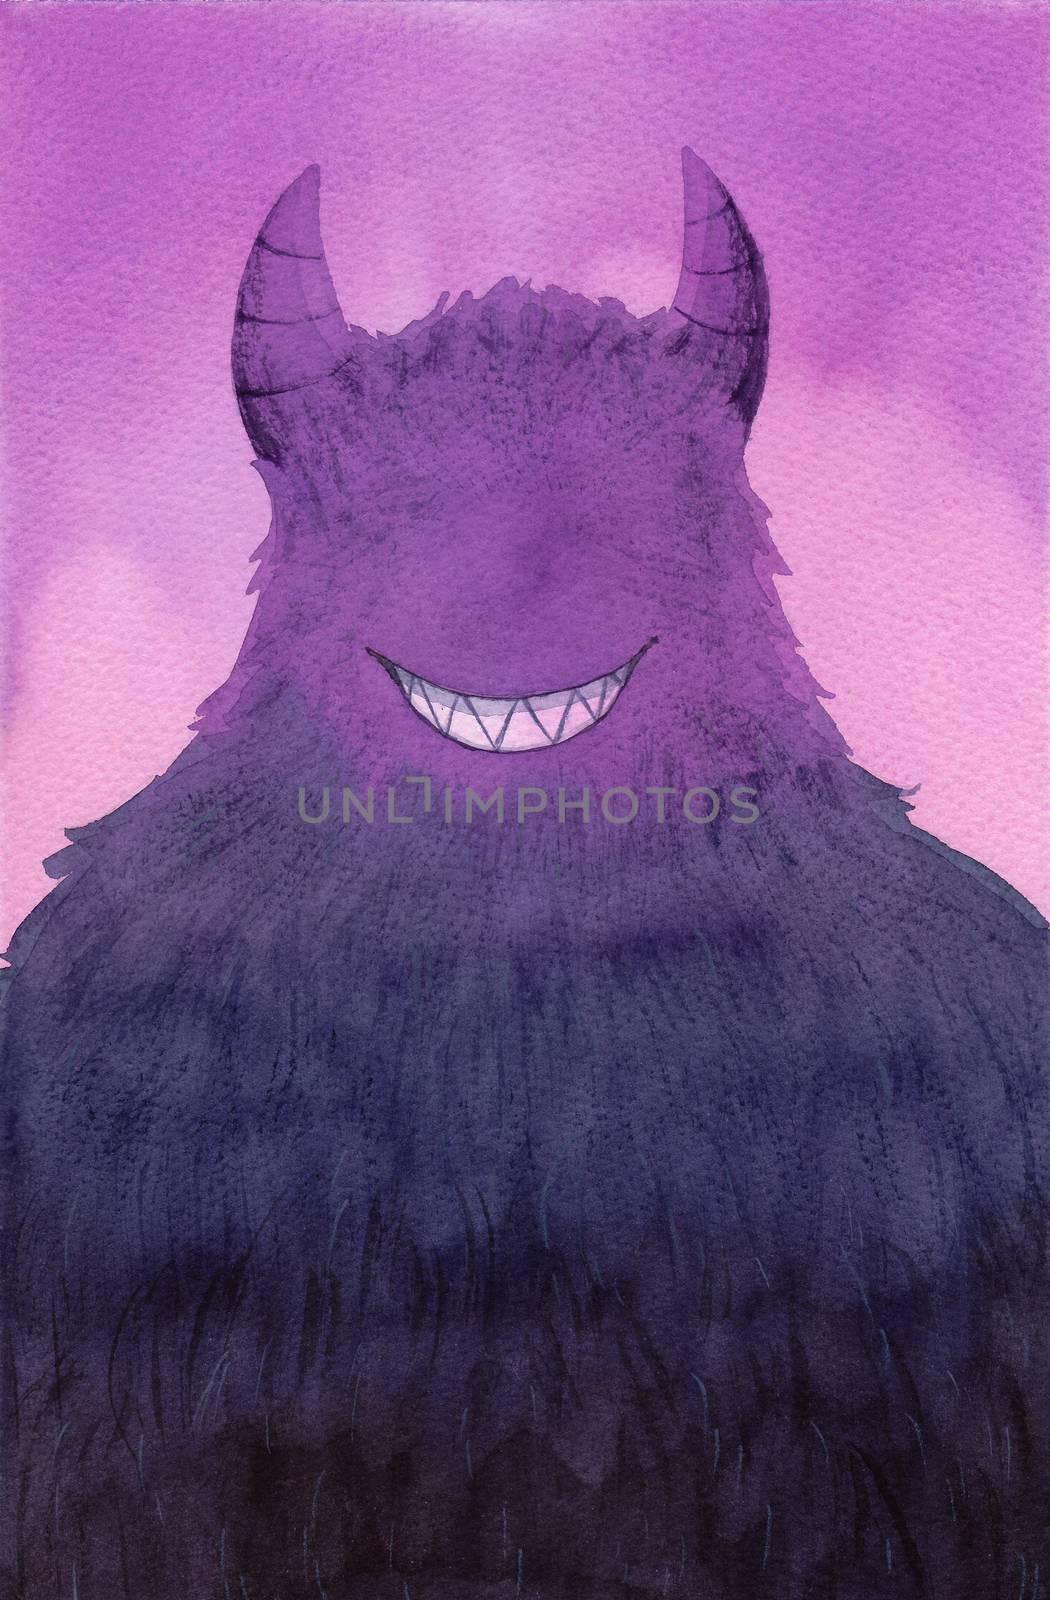 a purple devil monster, hand drawn watercolor illustration.